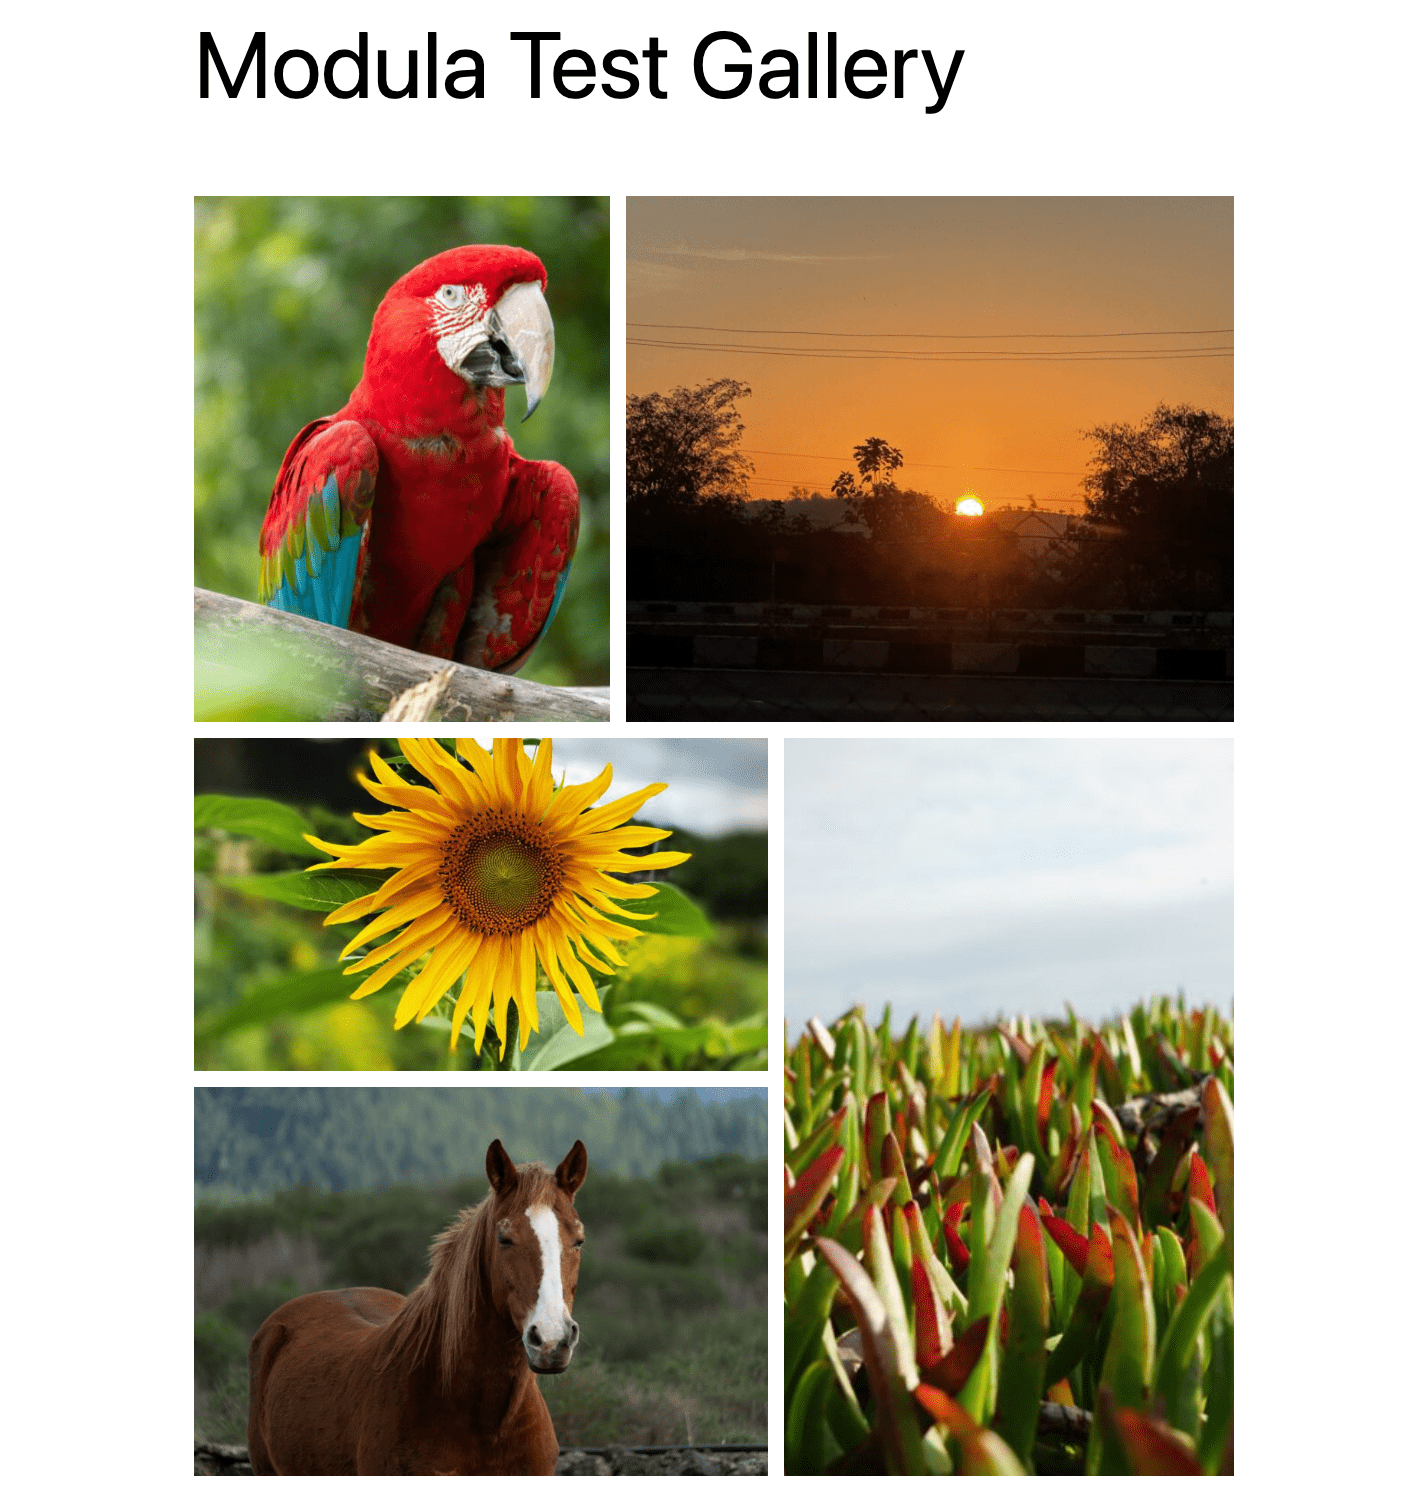 Modula test gallery